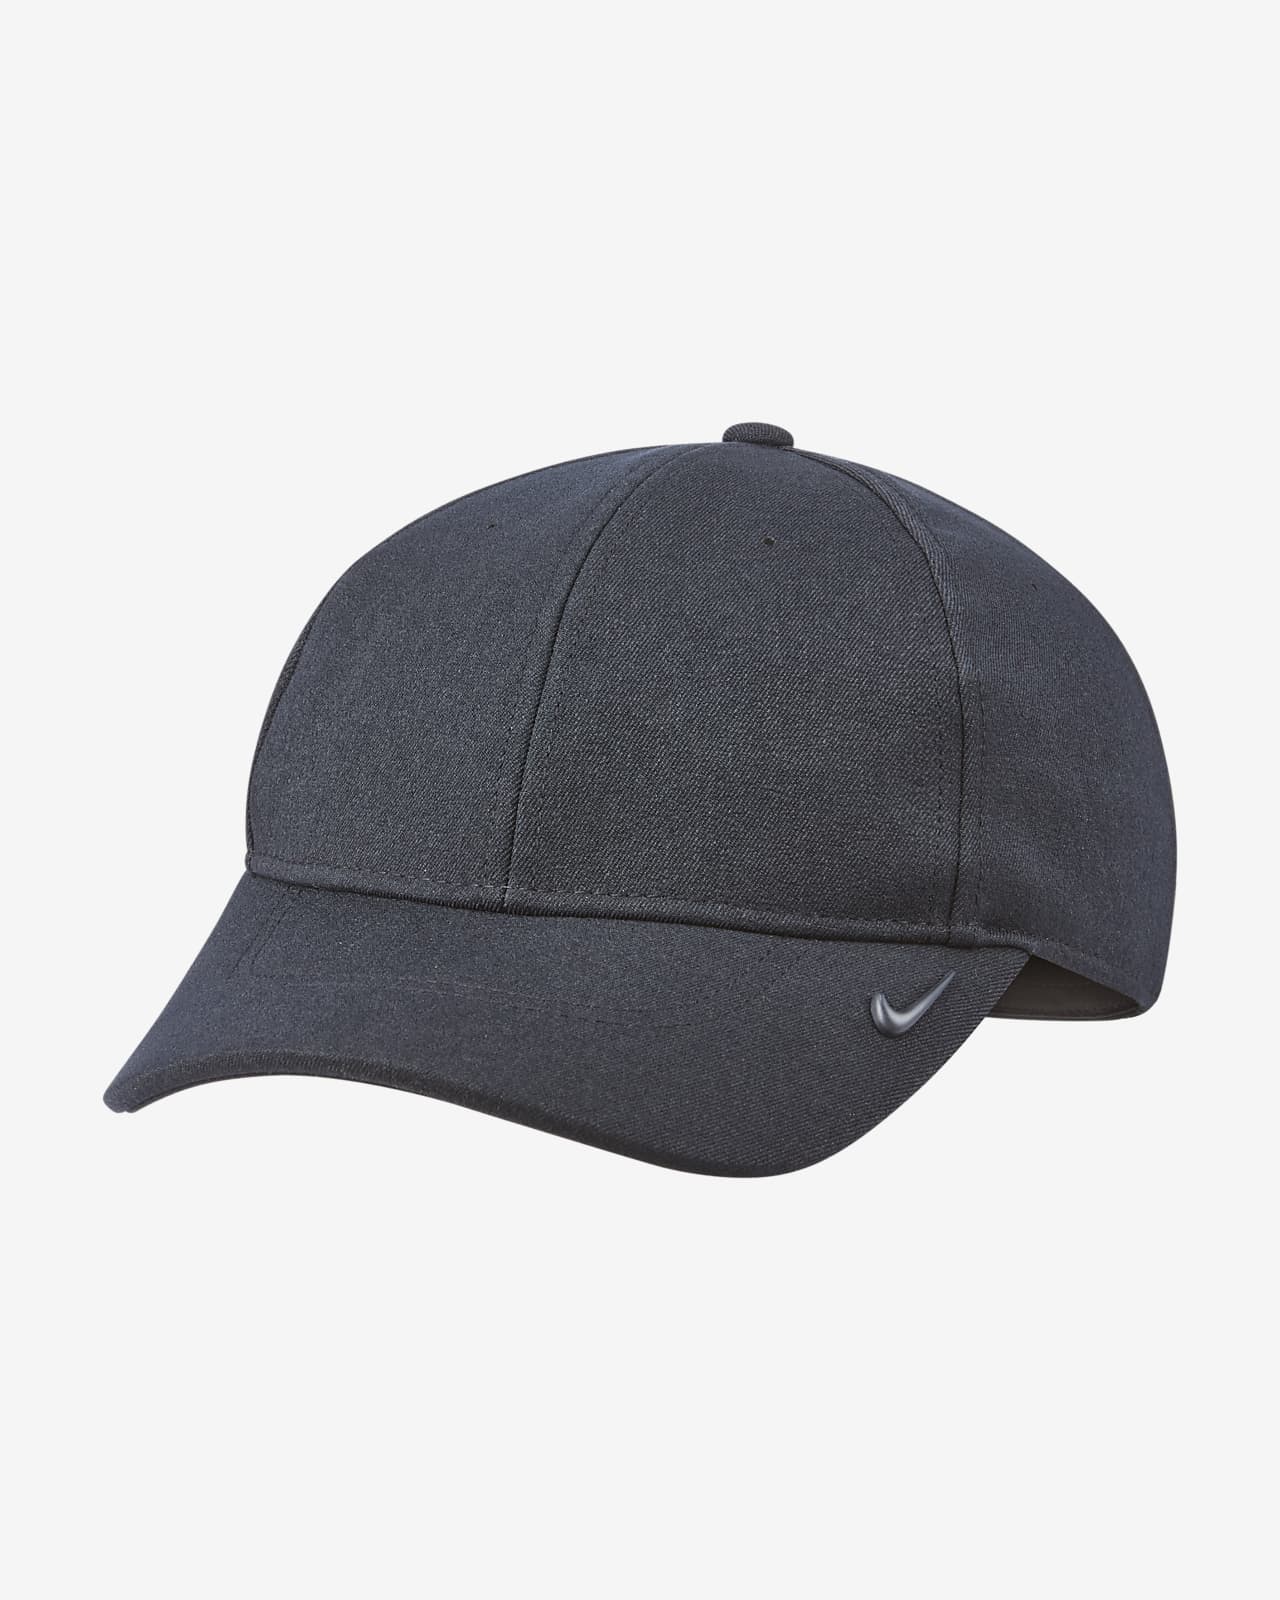 Nike Dri-FIT AeroBill One Women's Adjustable Hat